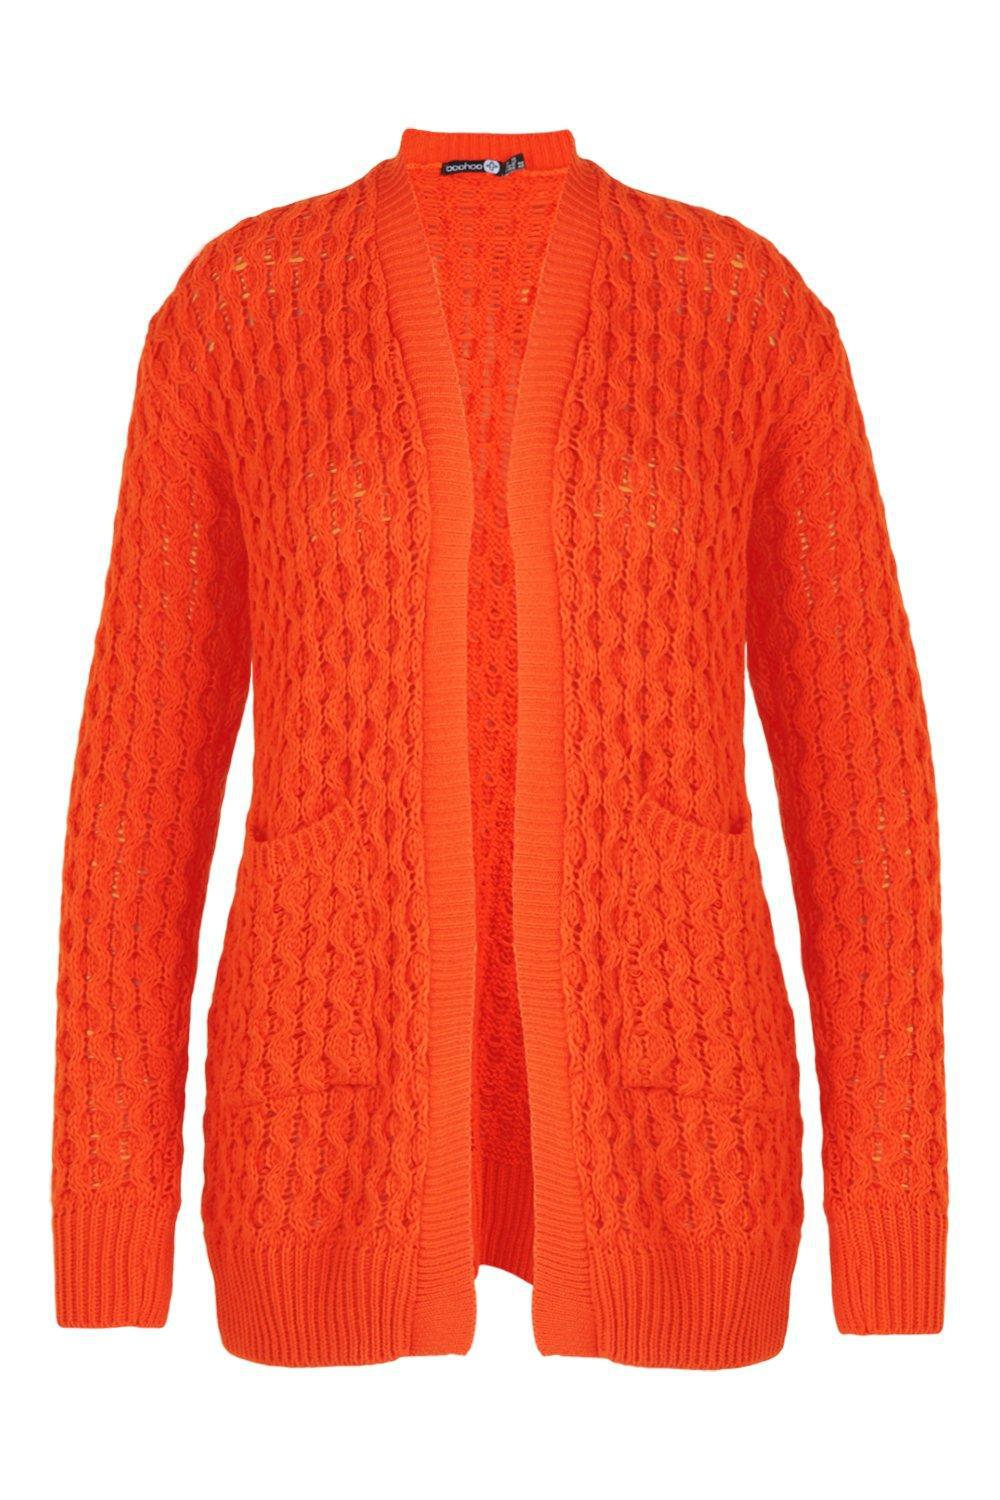 Lyst - Boohoo Plus Crochet Knitted Oversized Cardigan in Orange